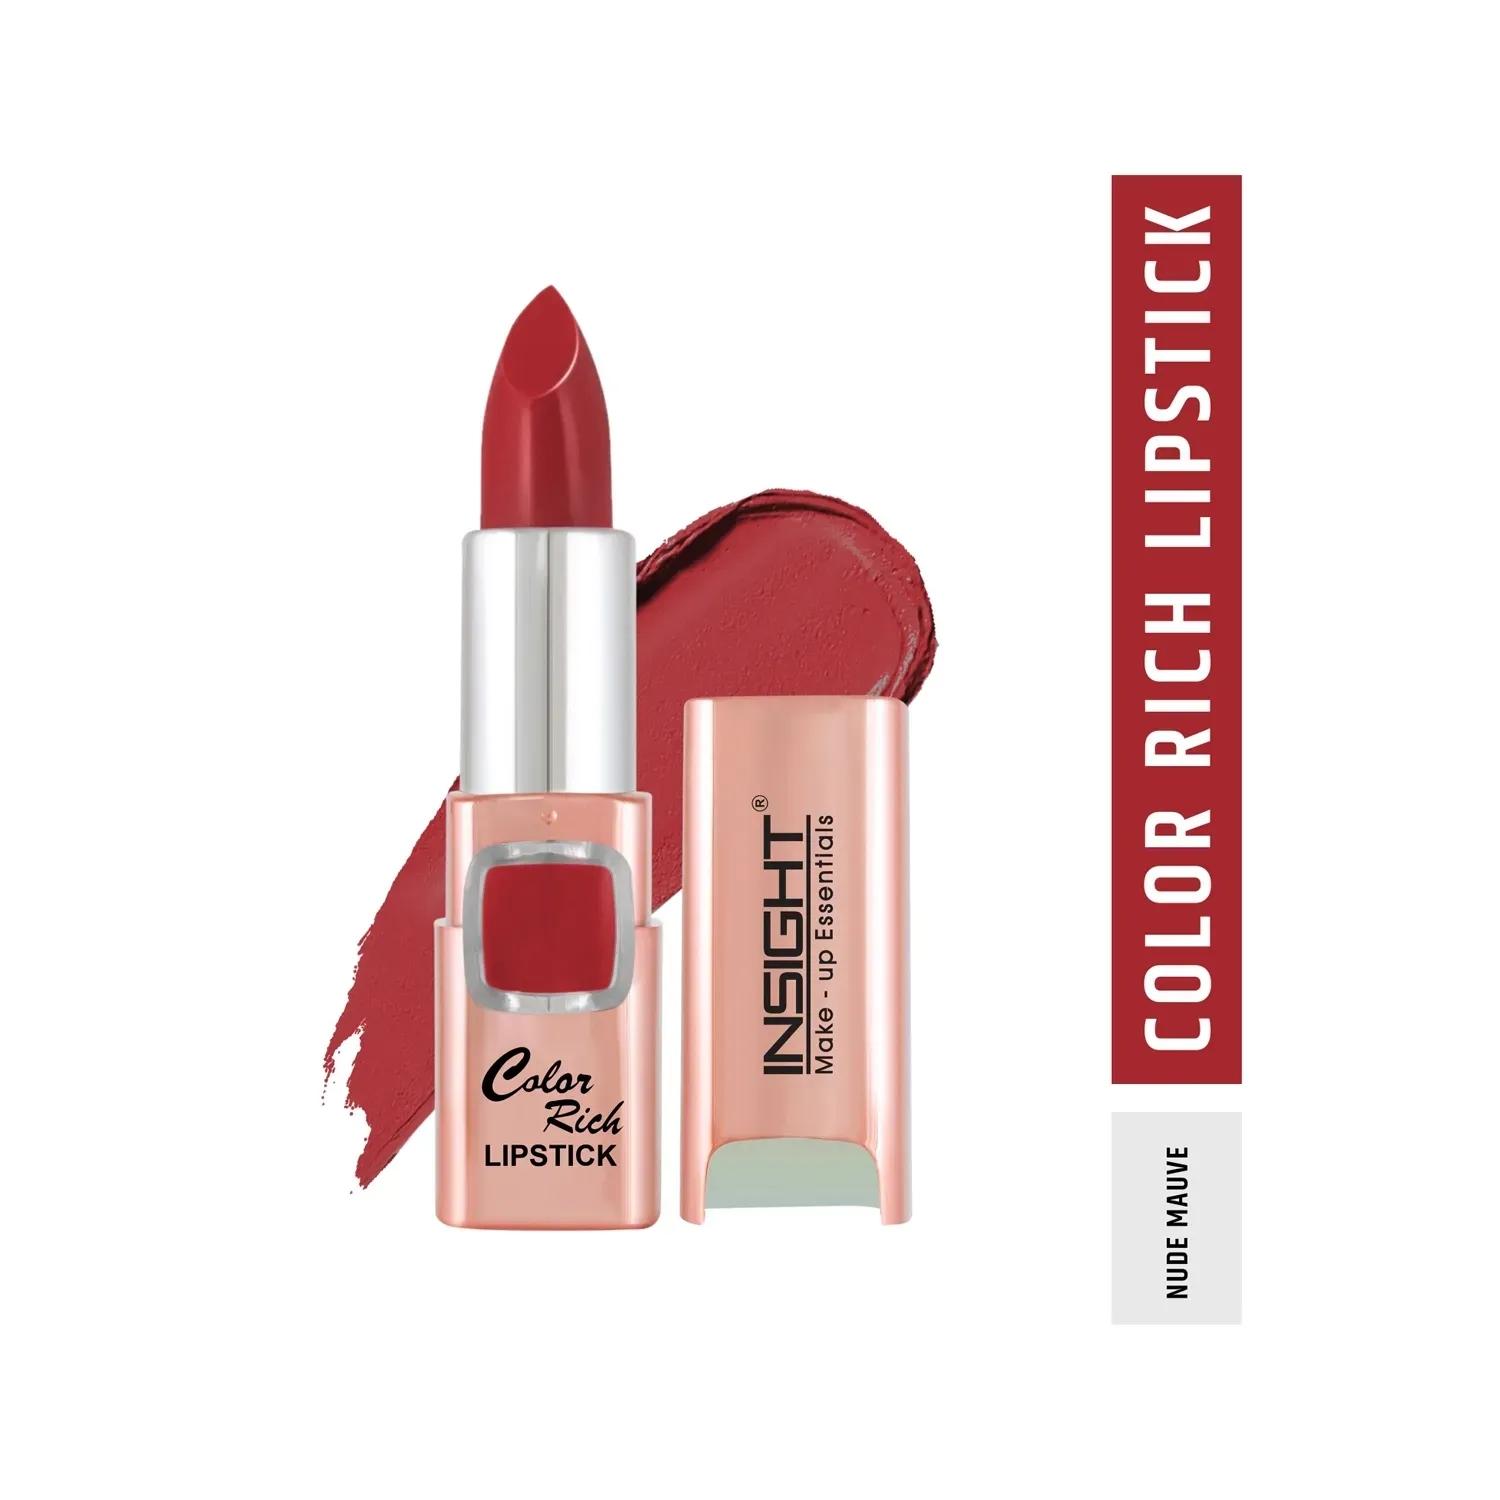 insight cosmetics color rich lipstick - nude mauve (4.2g)